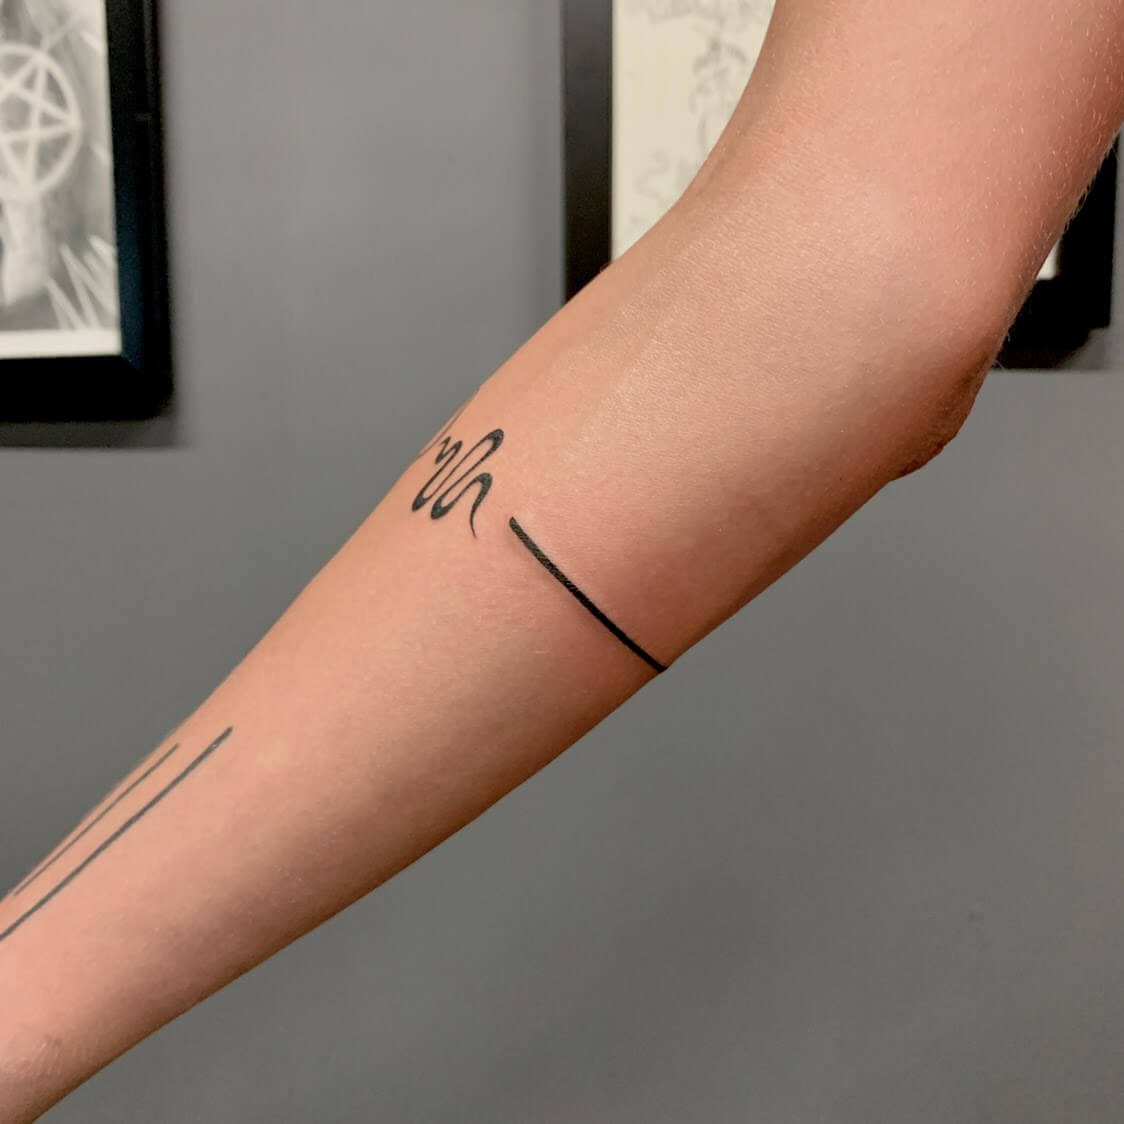 13 Secretly gorgeous armband tattoo that you'll love